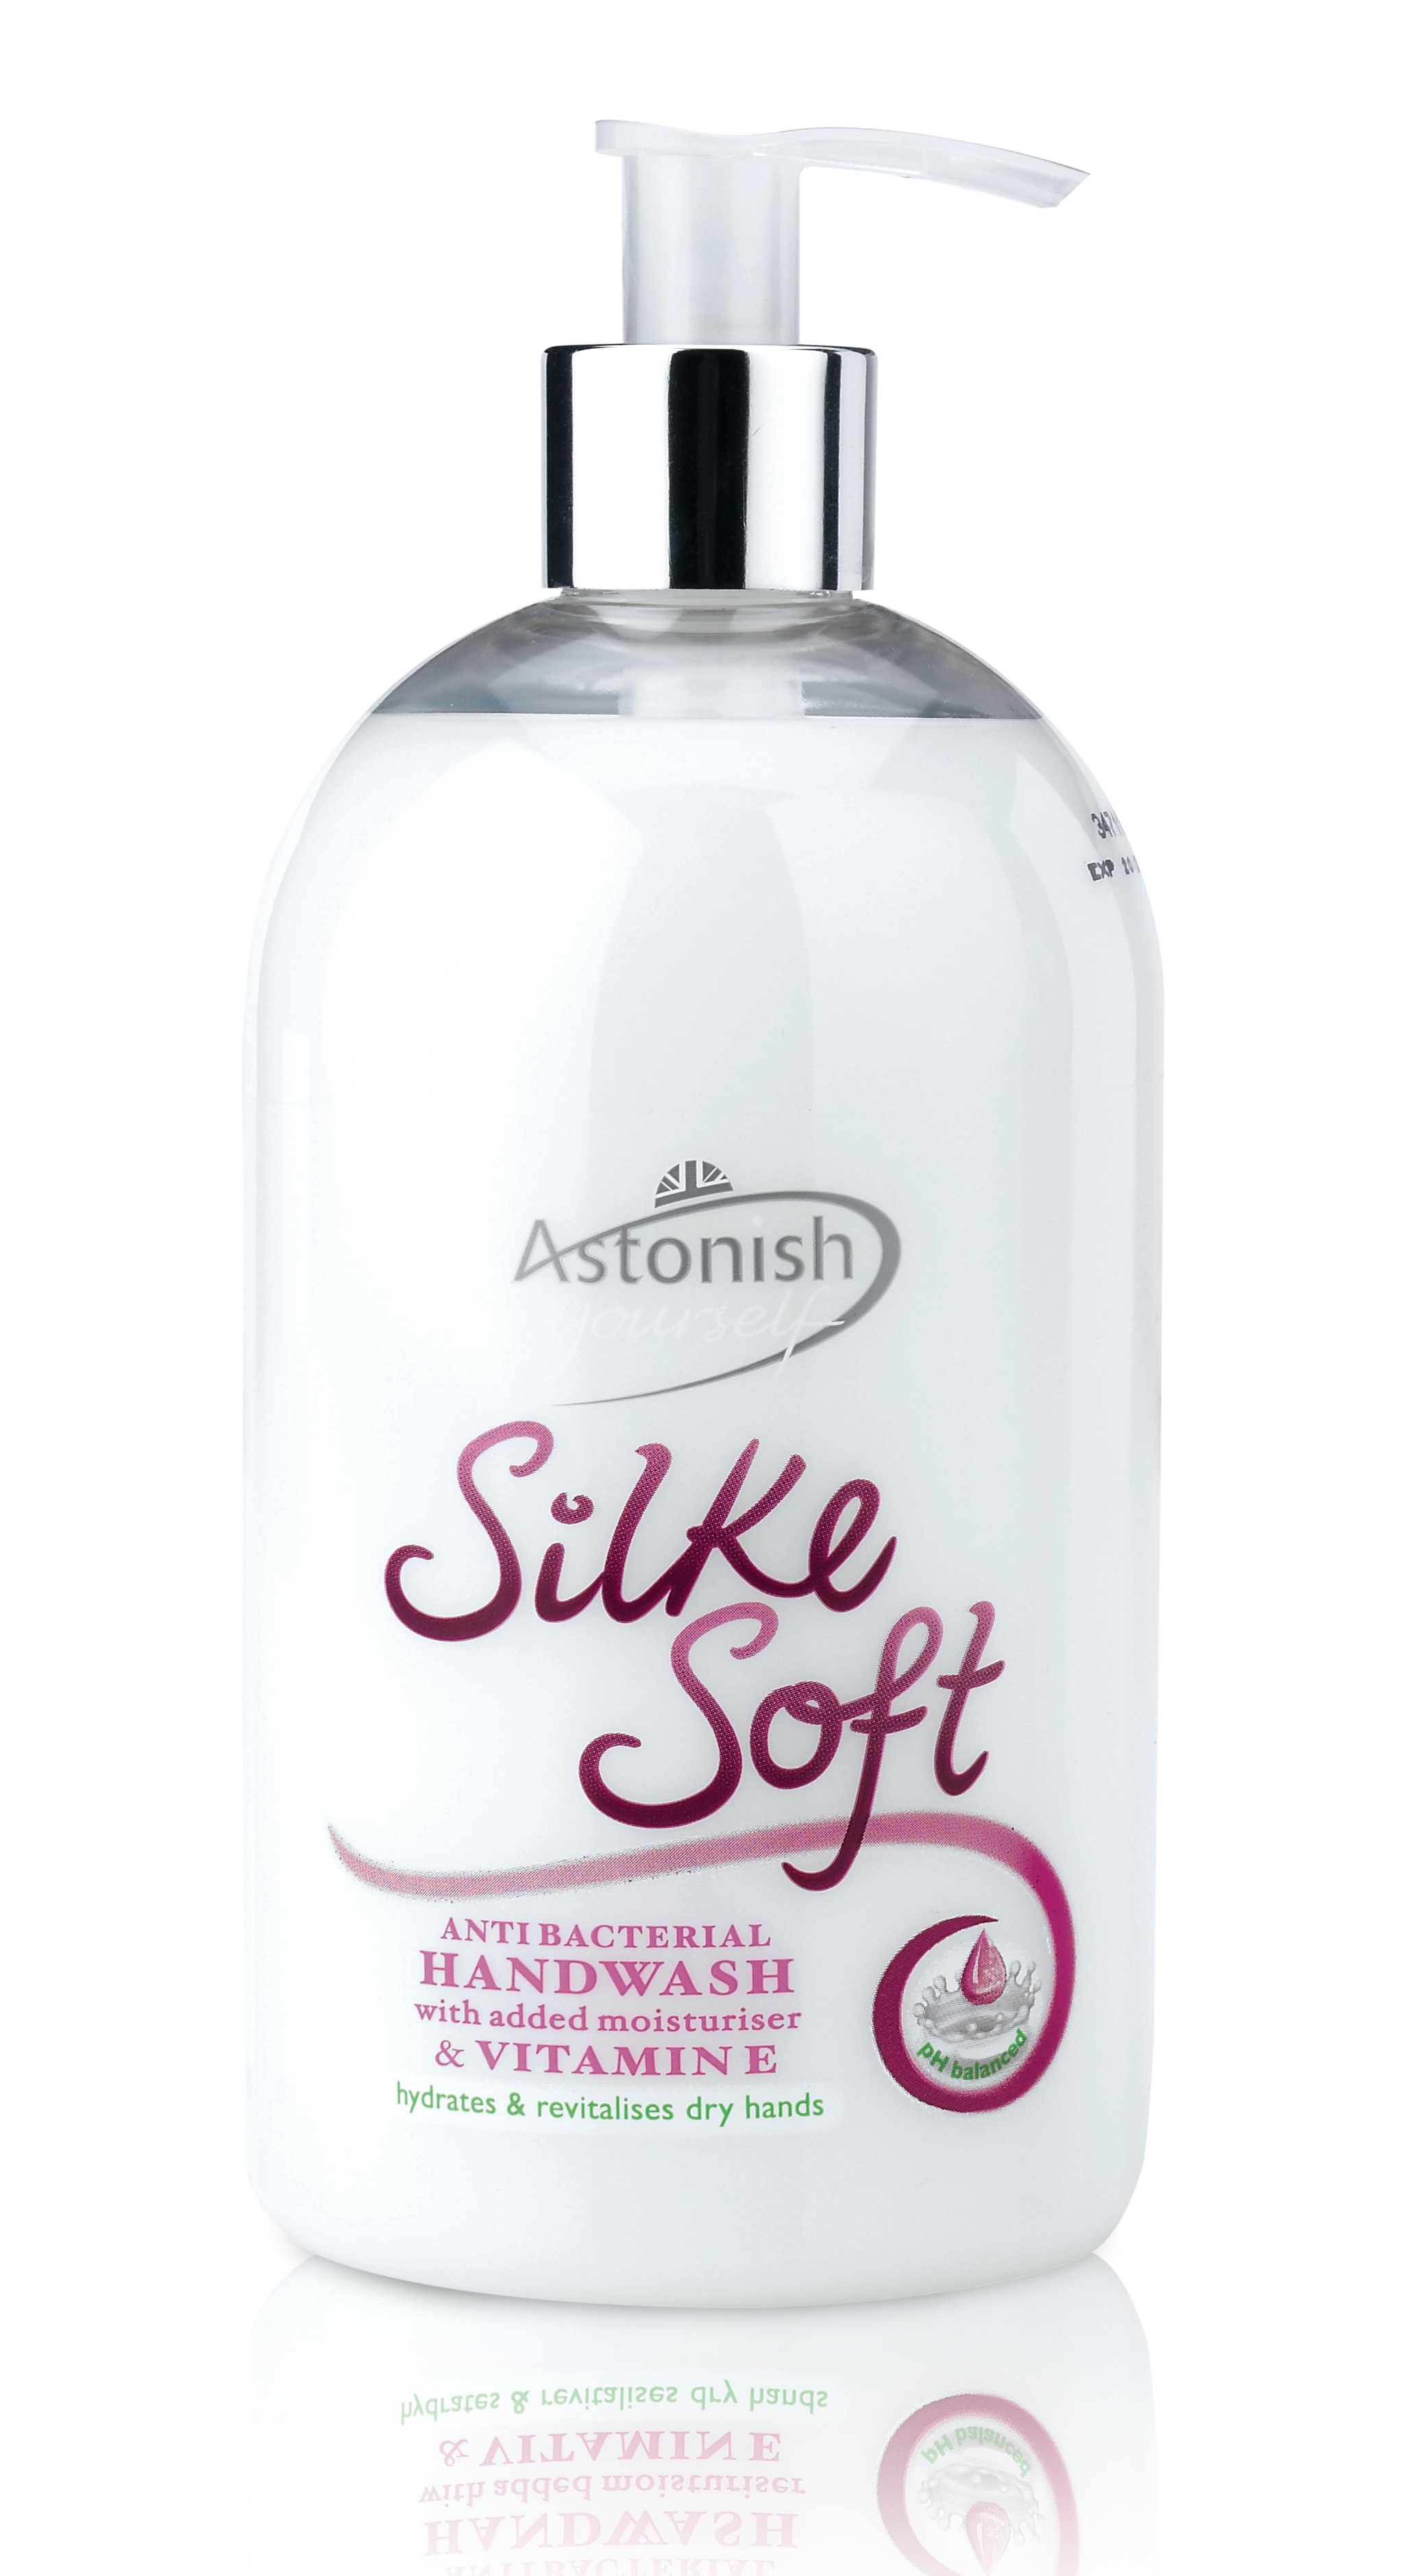 Astonish Silke Soft Handwash 500ml.jpg